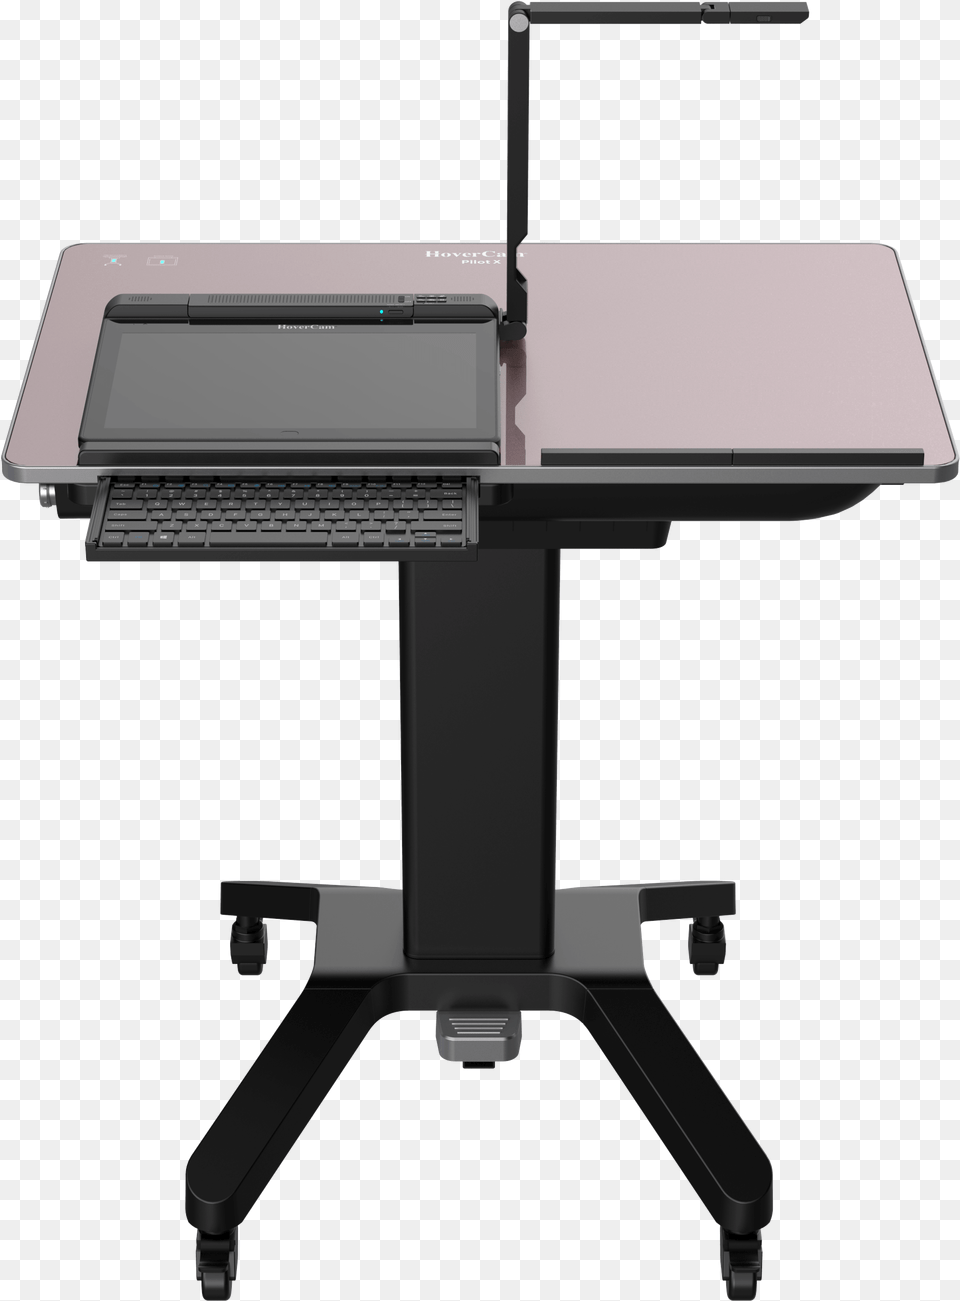 Hovercam Pilot X, Desk, Furniture, Table, Computer Free Png Download